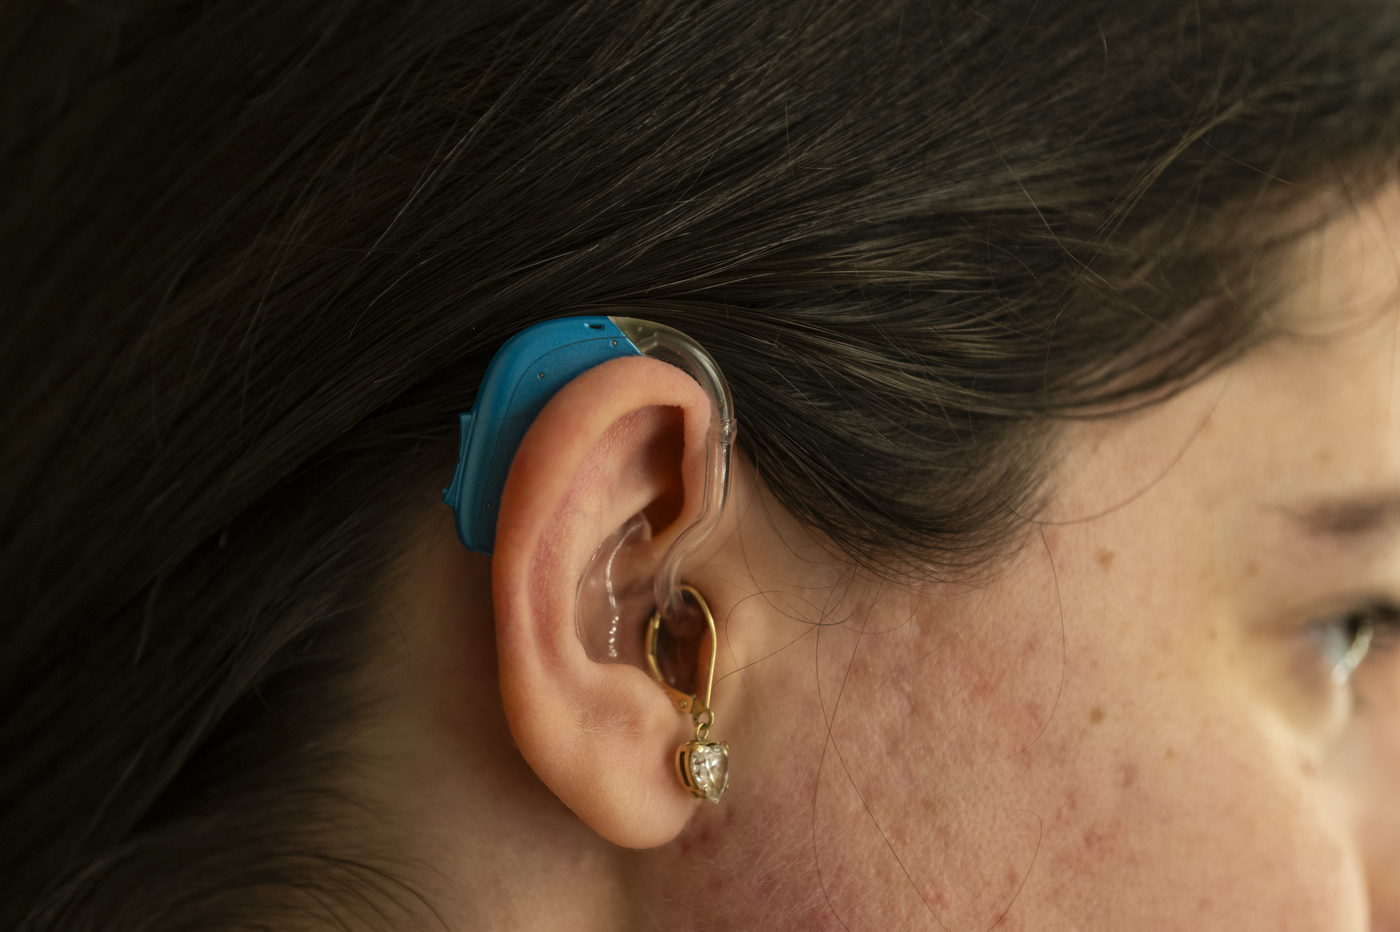 Rosenfeld's hearing aid